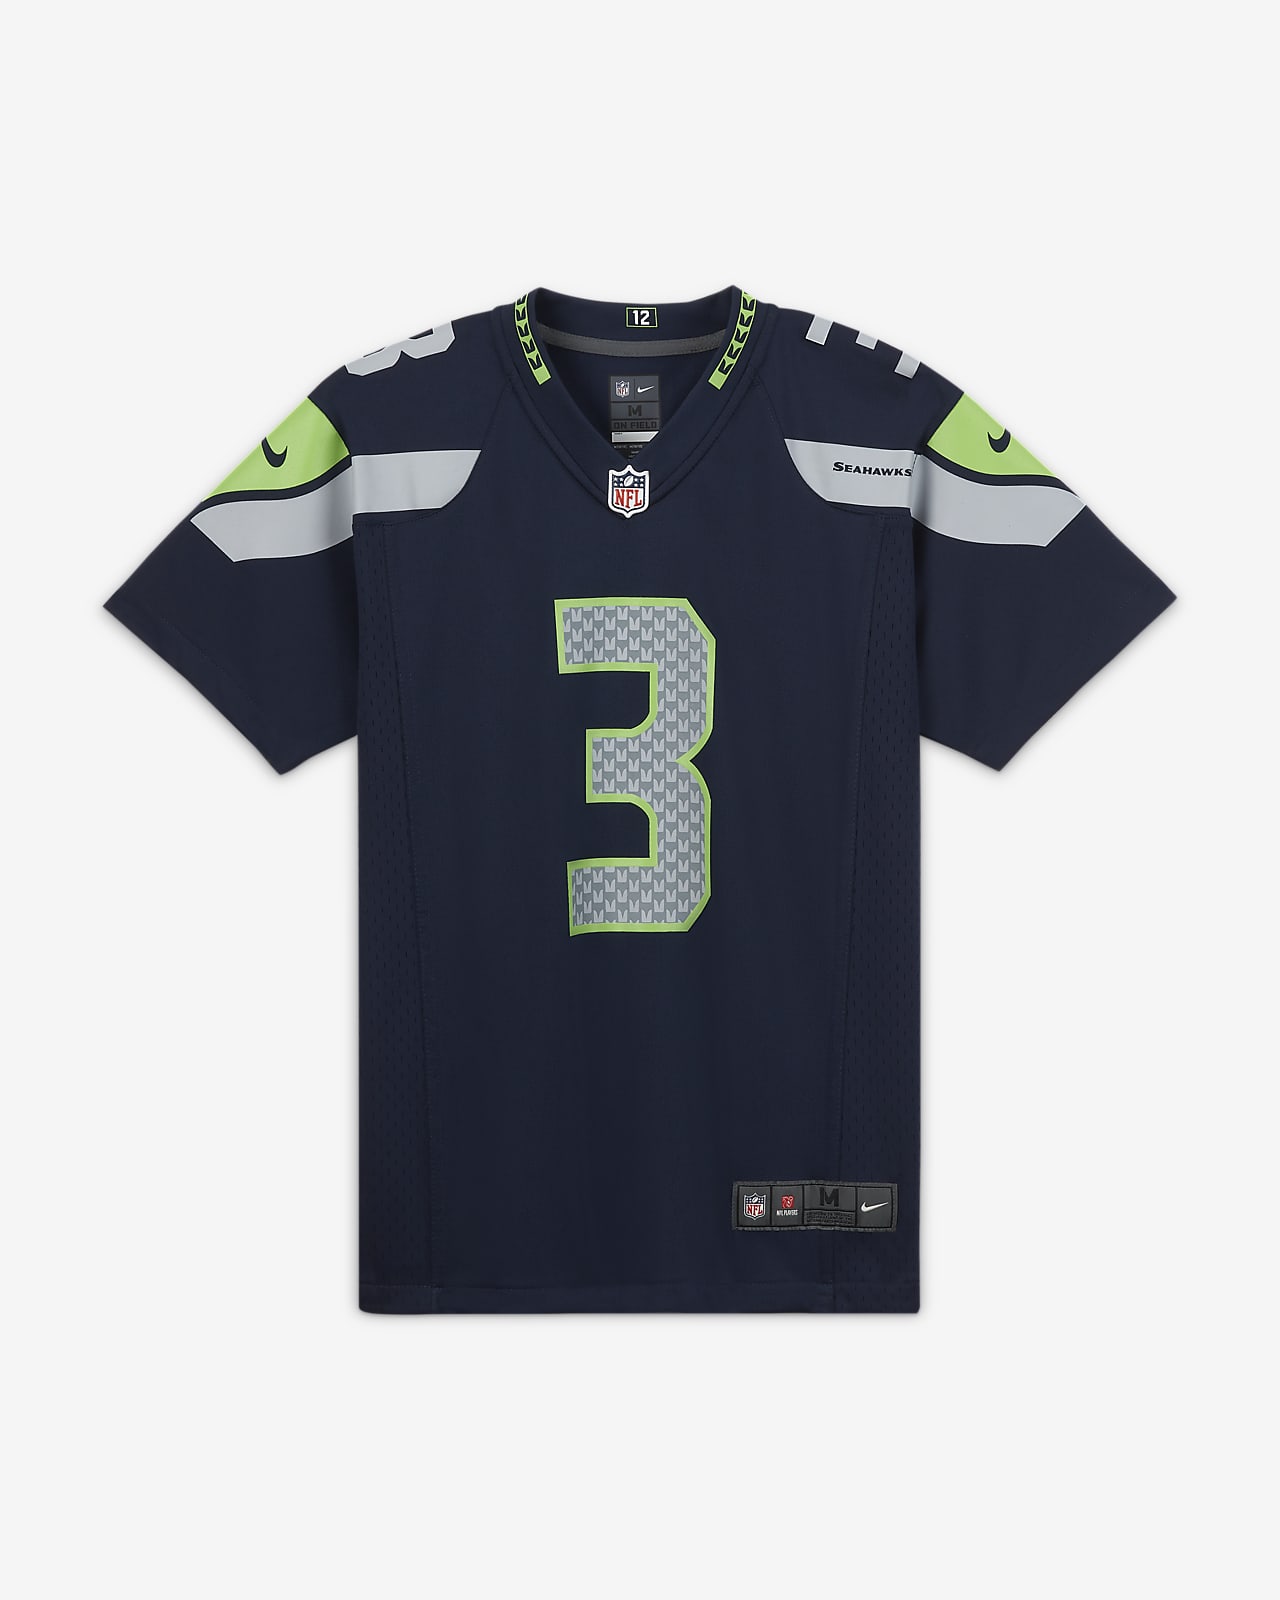 NFL Seattle Seahawks (Russell Wilson) Camiseta de fútbol americano del partido - Niño/a